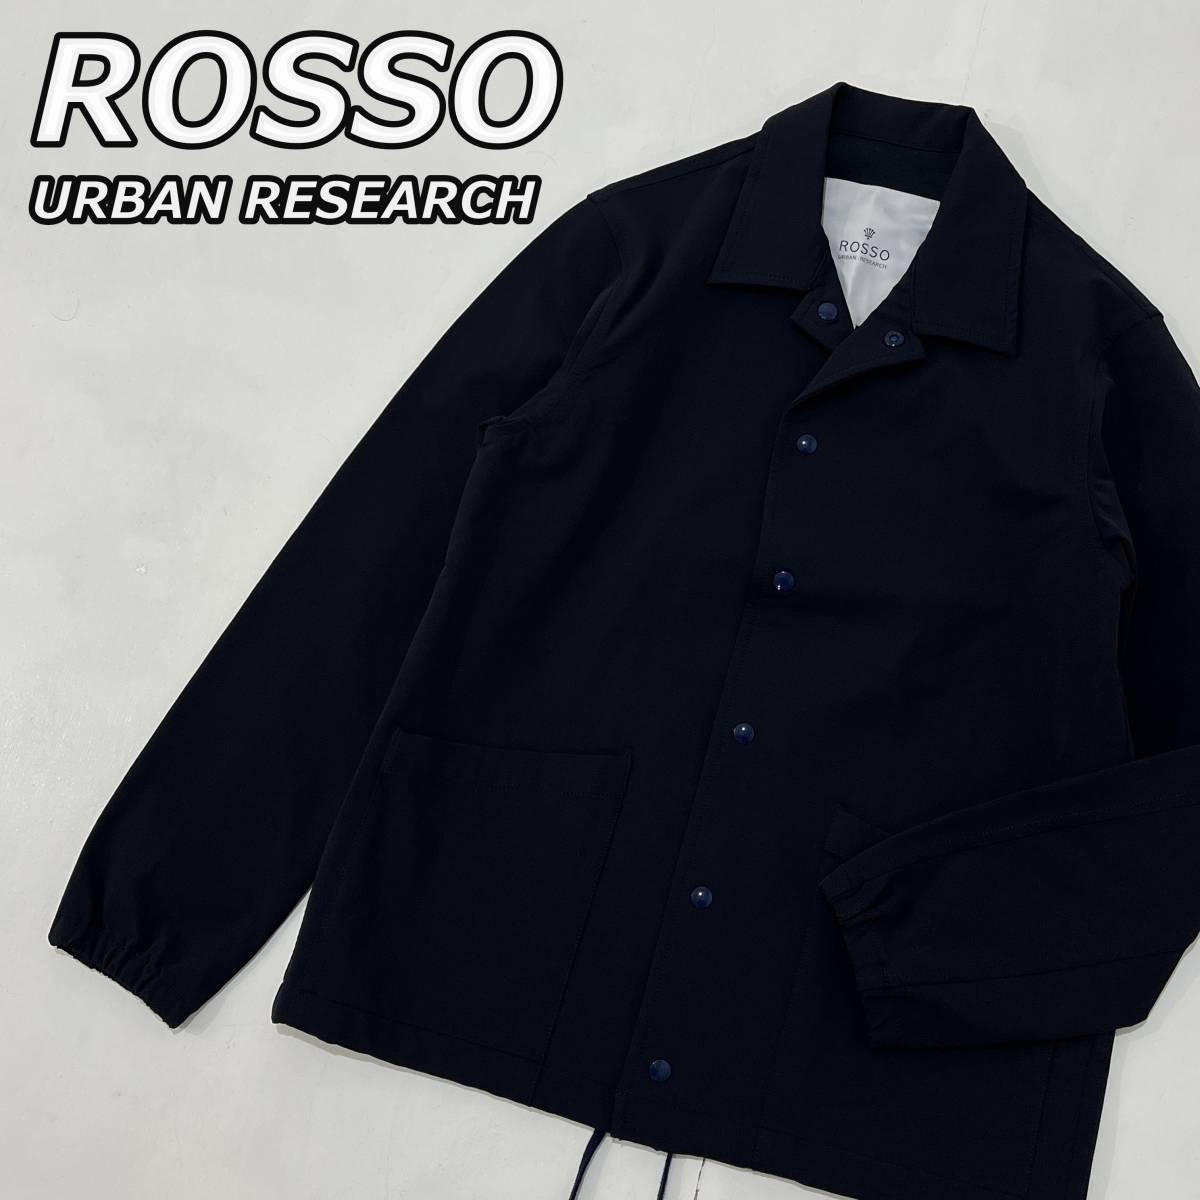 [ROSSO] rosso Urban Research стрейч нейлон коуч жакет мужской темно-синий цвет темно-синий urban research RA76-17M005